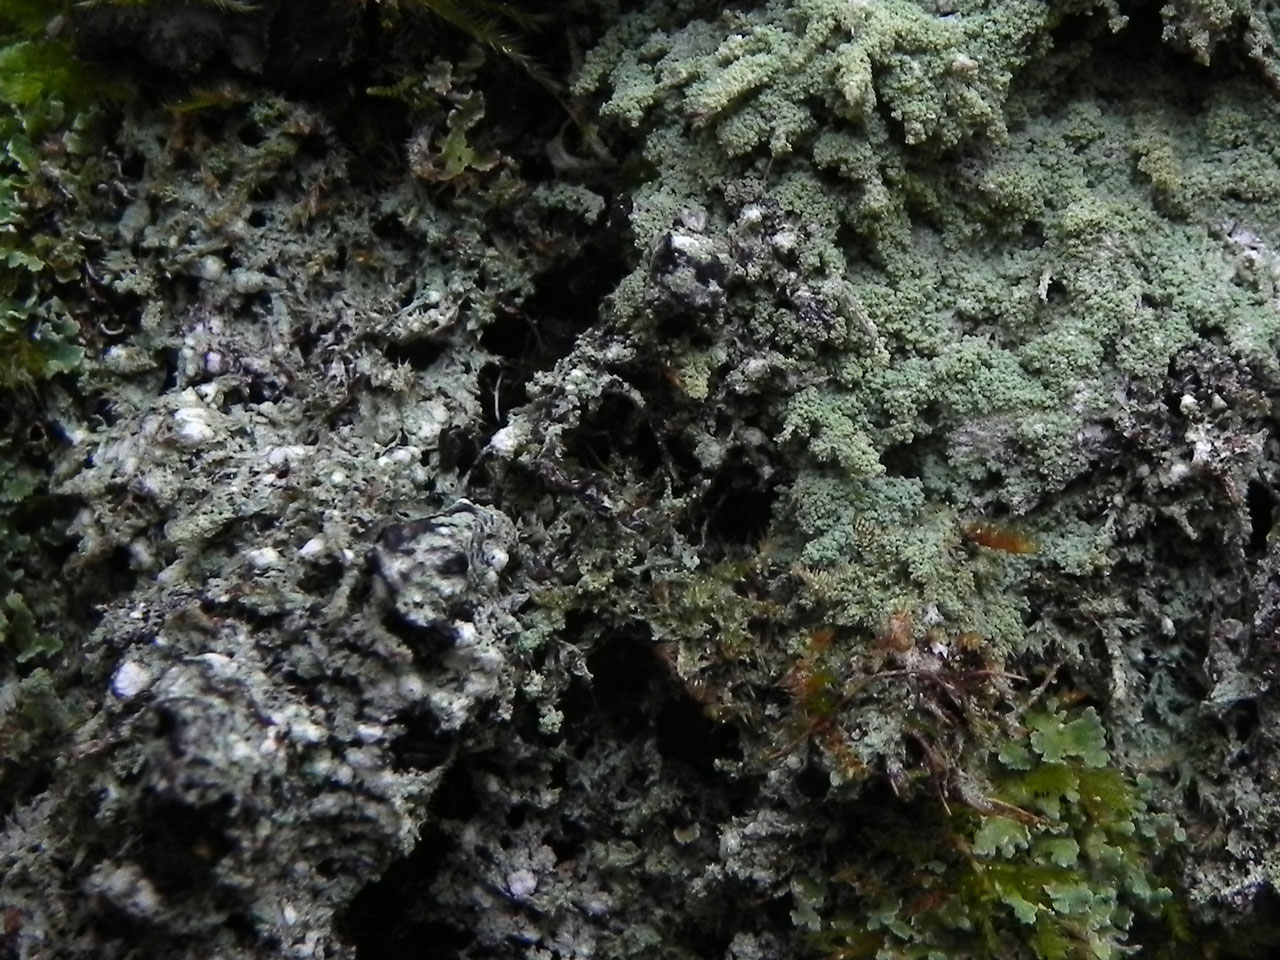 Megalospora tuberculosa (left) & Megalaria pulverea (right), Clonbur Wood, Co. Mayo